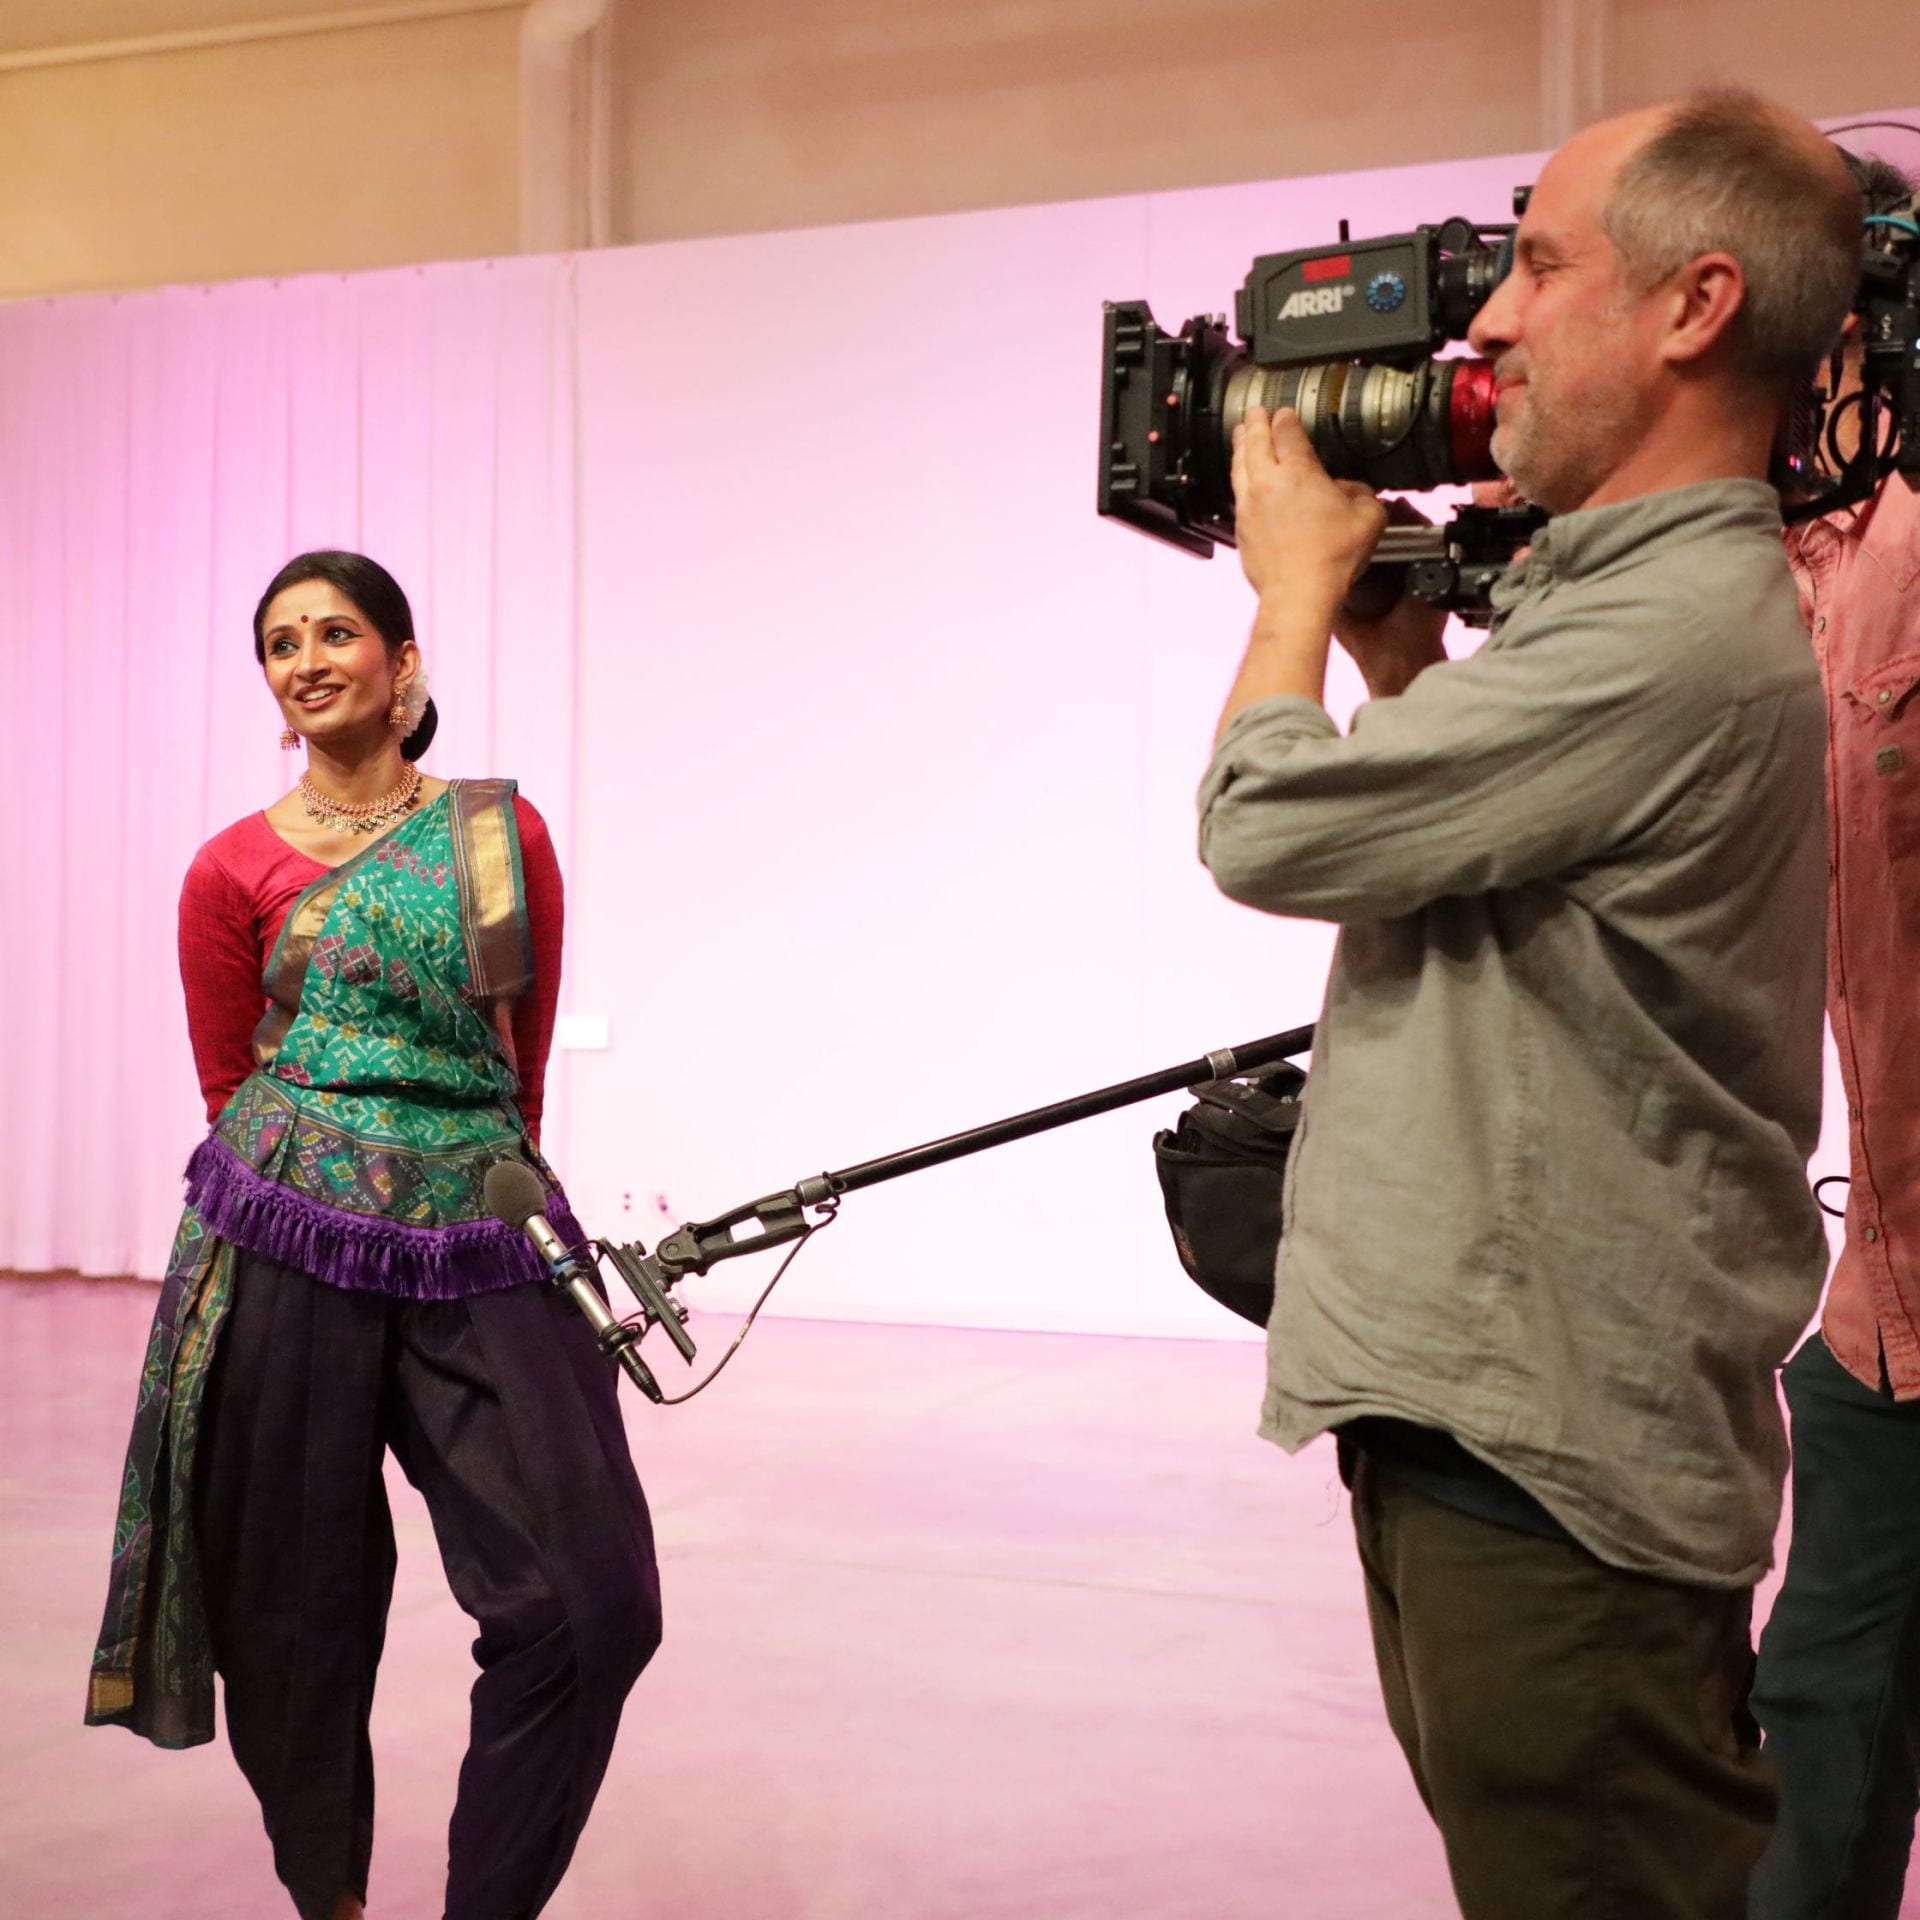 Shriya being interviewed for WGBH Nova program